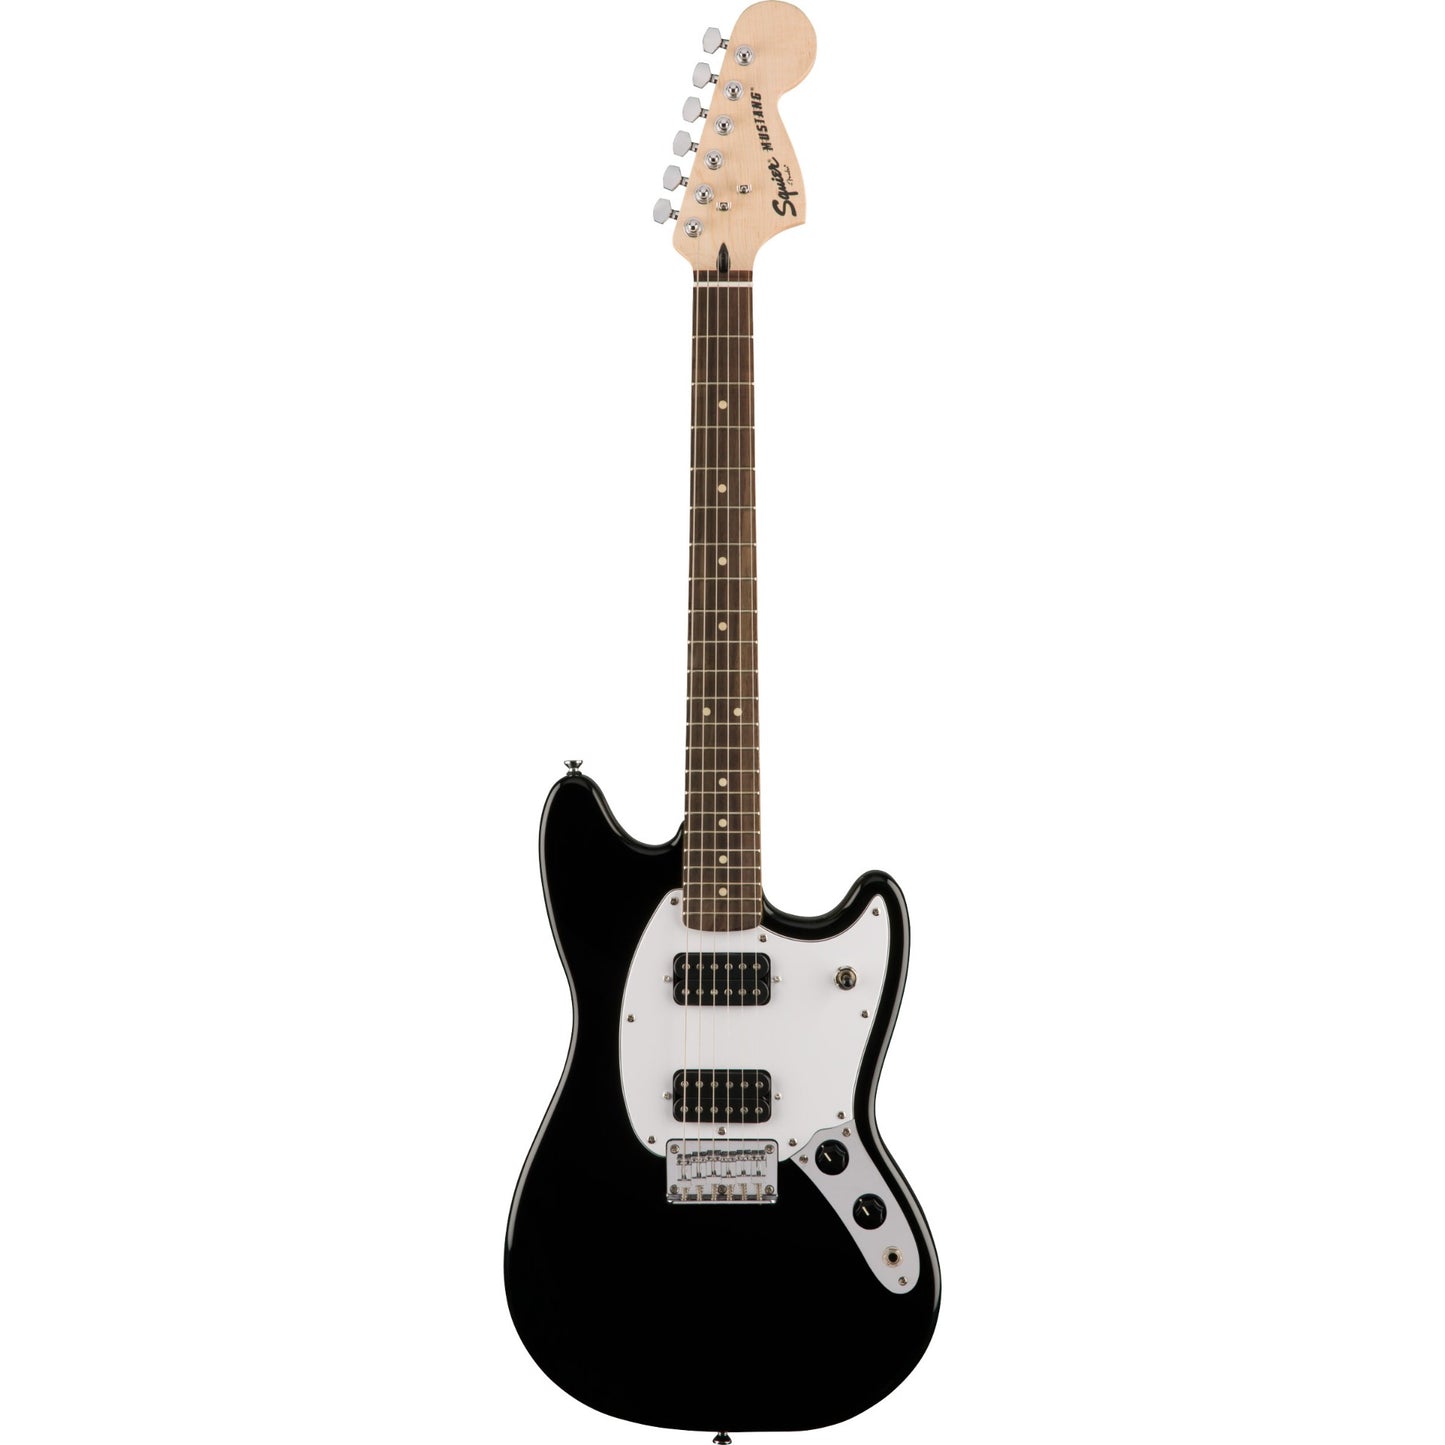 Squier Bullet Mustang HH Electric Guitar - Black